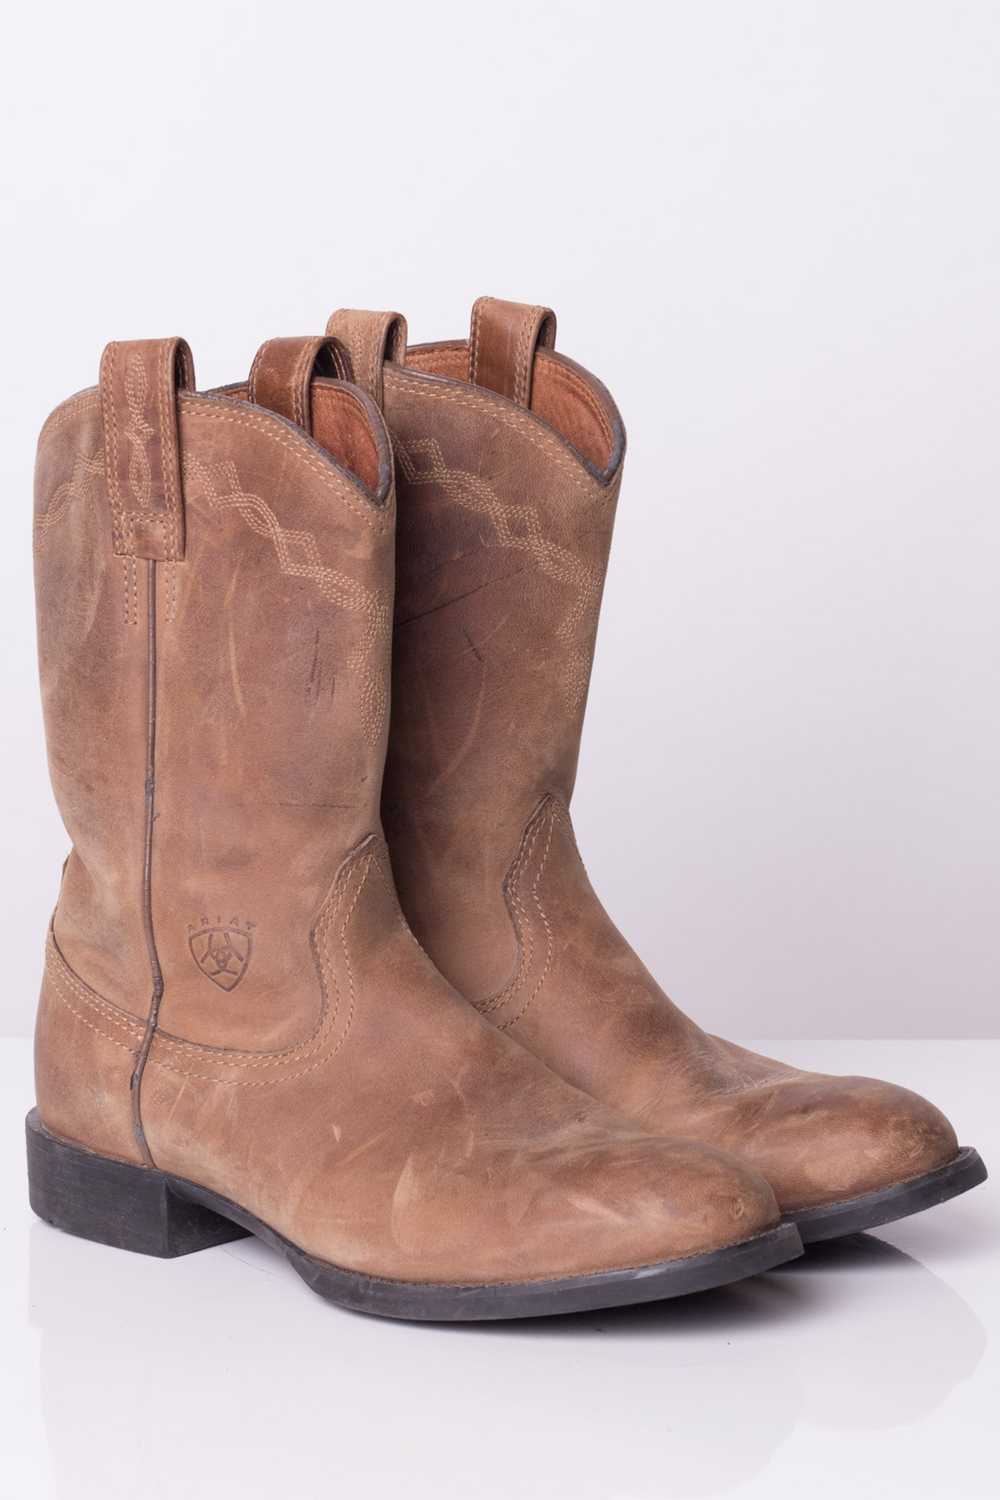 Brown Ariat Cowboy Boots (6.5 B) - image 2